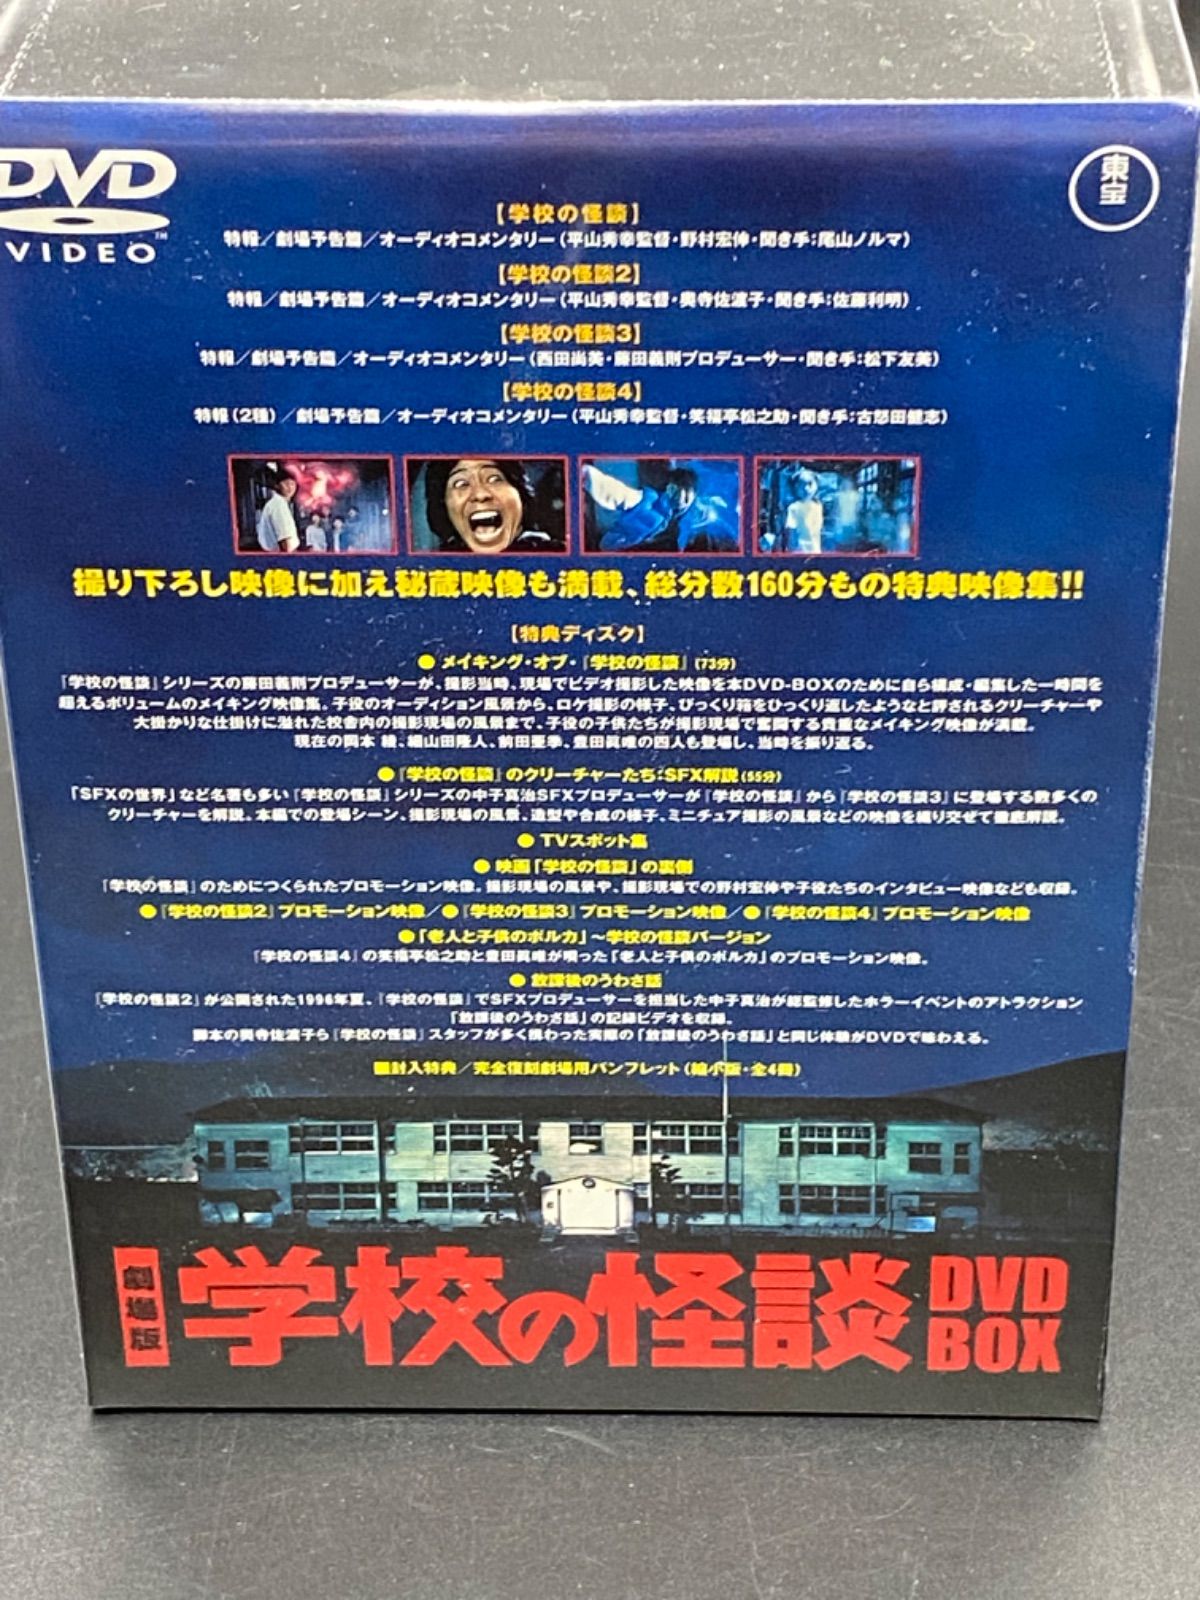 劇場版 学校の怪談 DVD-BOX〈初回限定生産・5枚組〉 - メルカリ